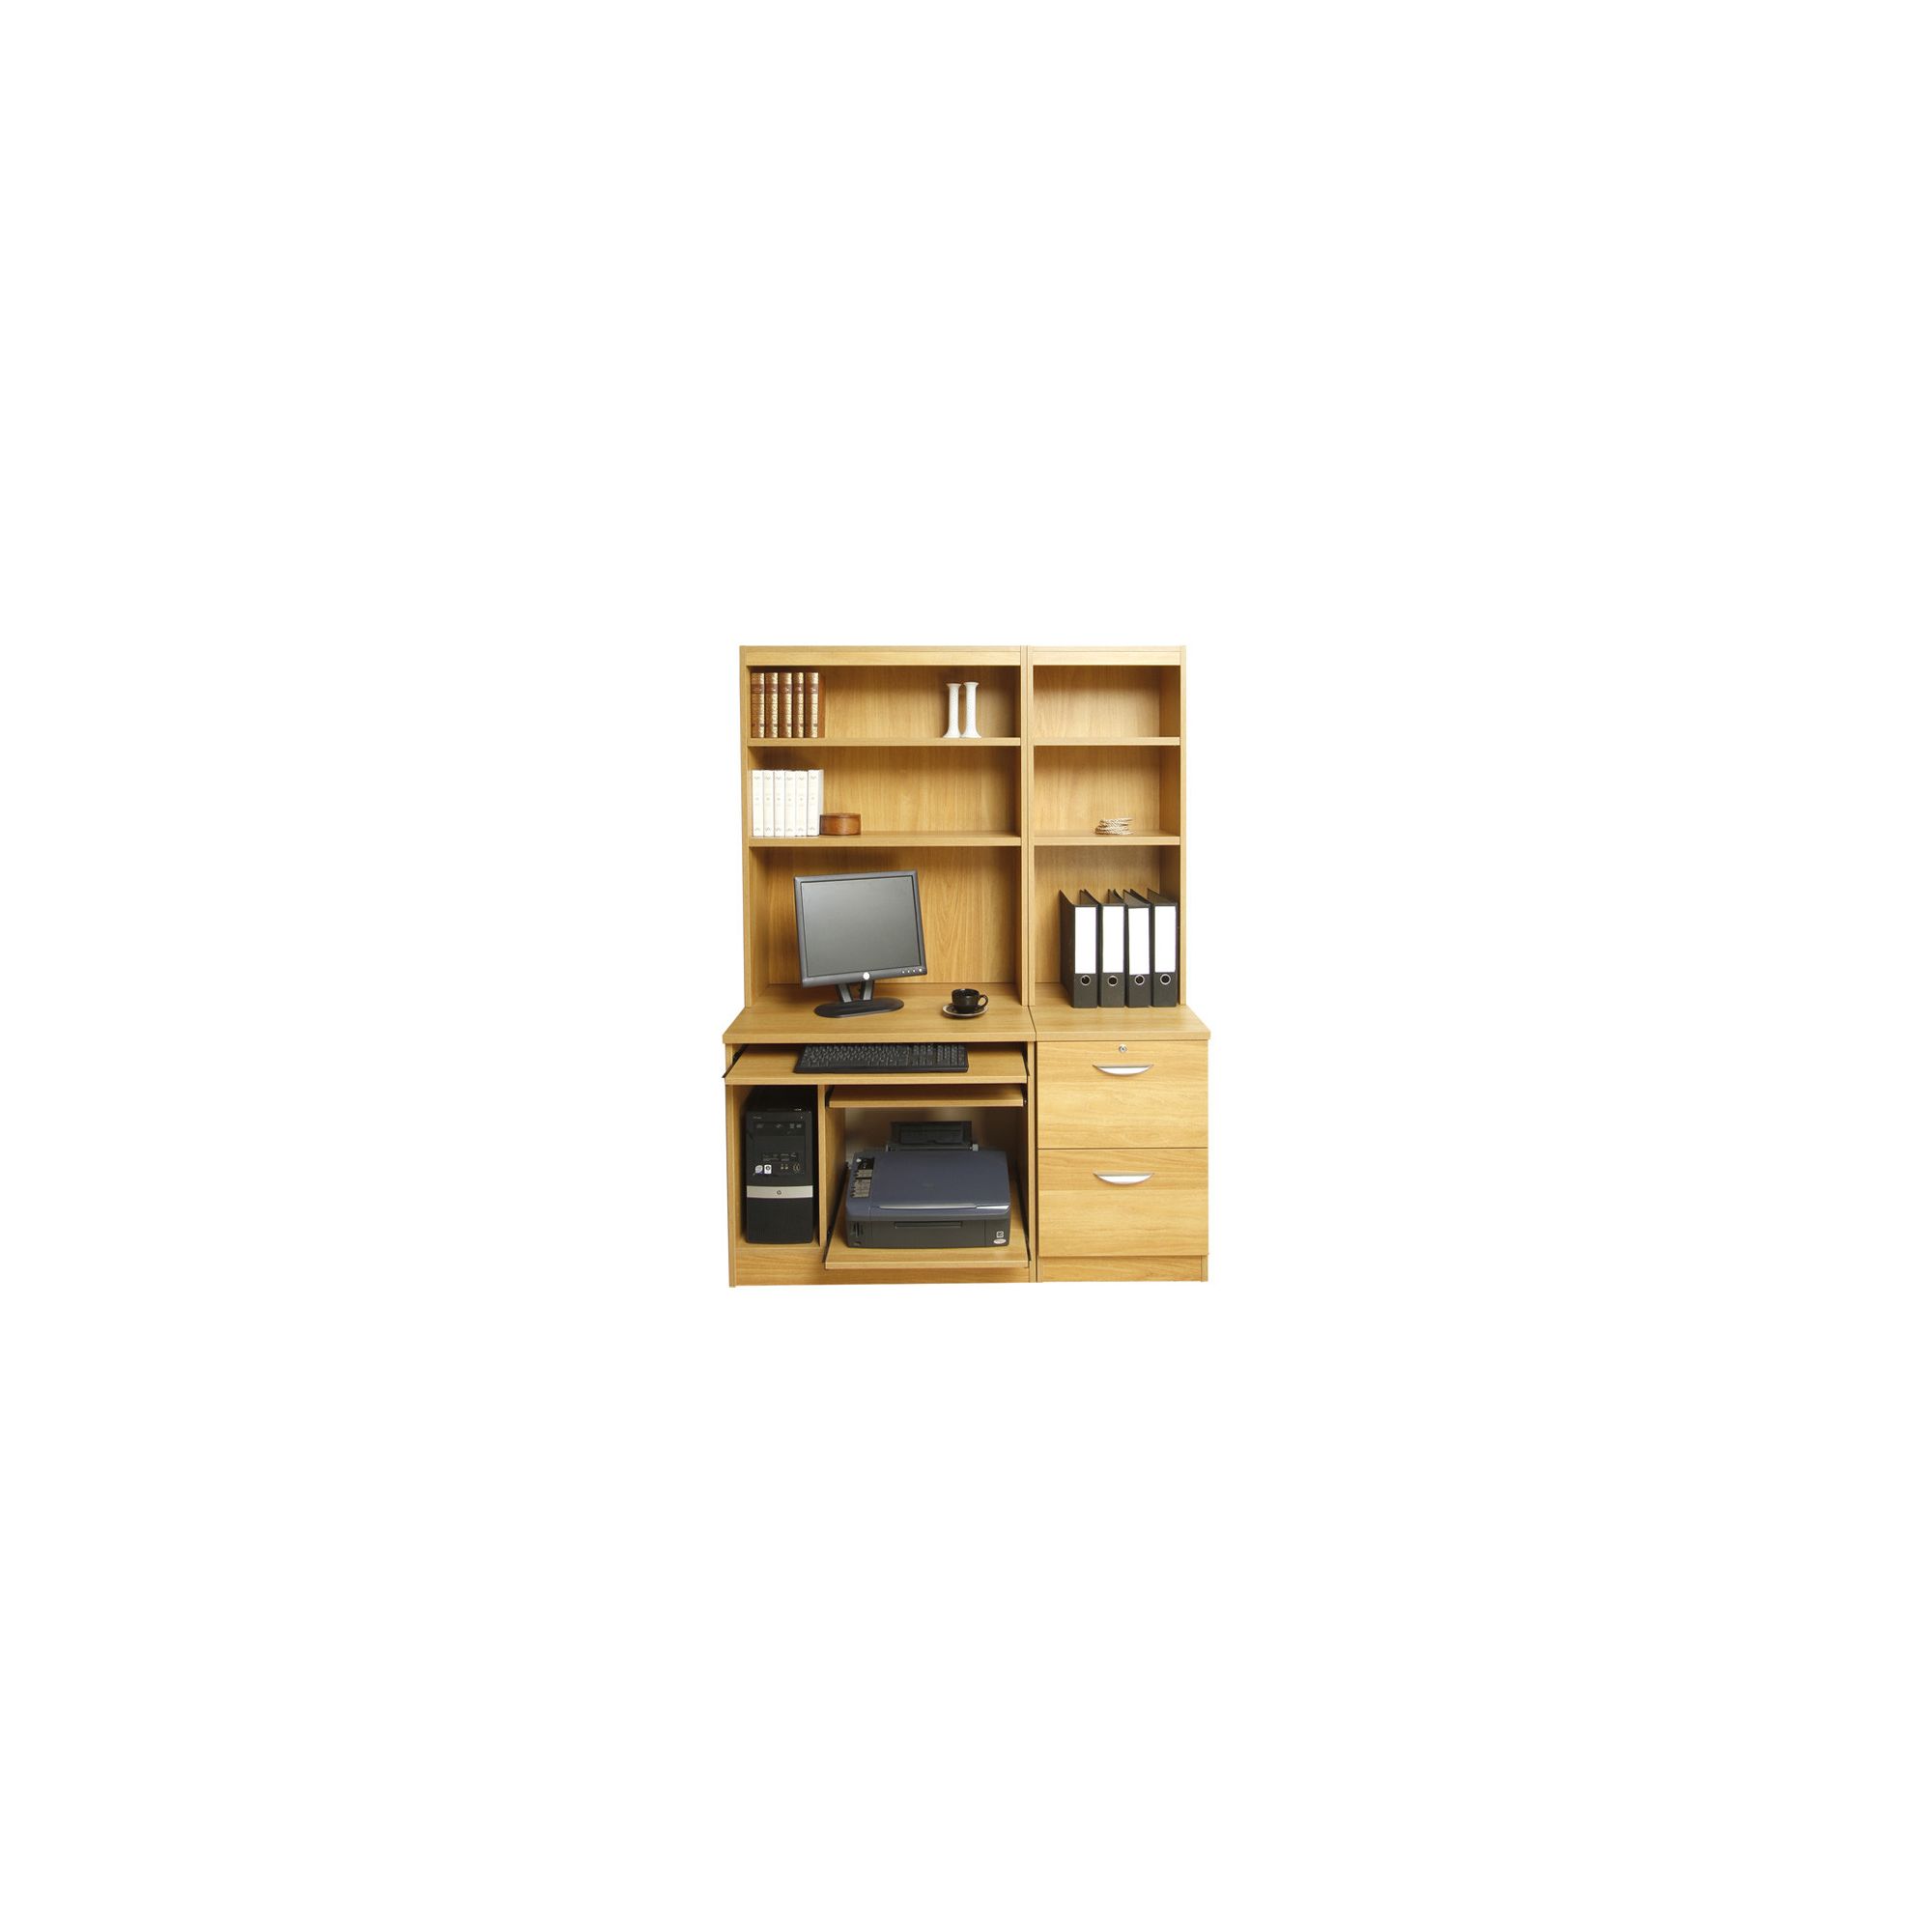 Enduro Home Office Desk / Workstation with Pedestal, Printer / CPU Storage and Inbuilt Bookshelves - English Oak at Tesco Direct